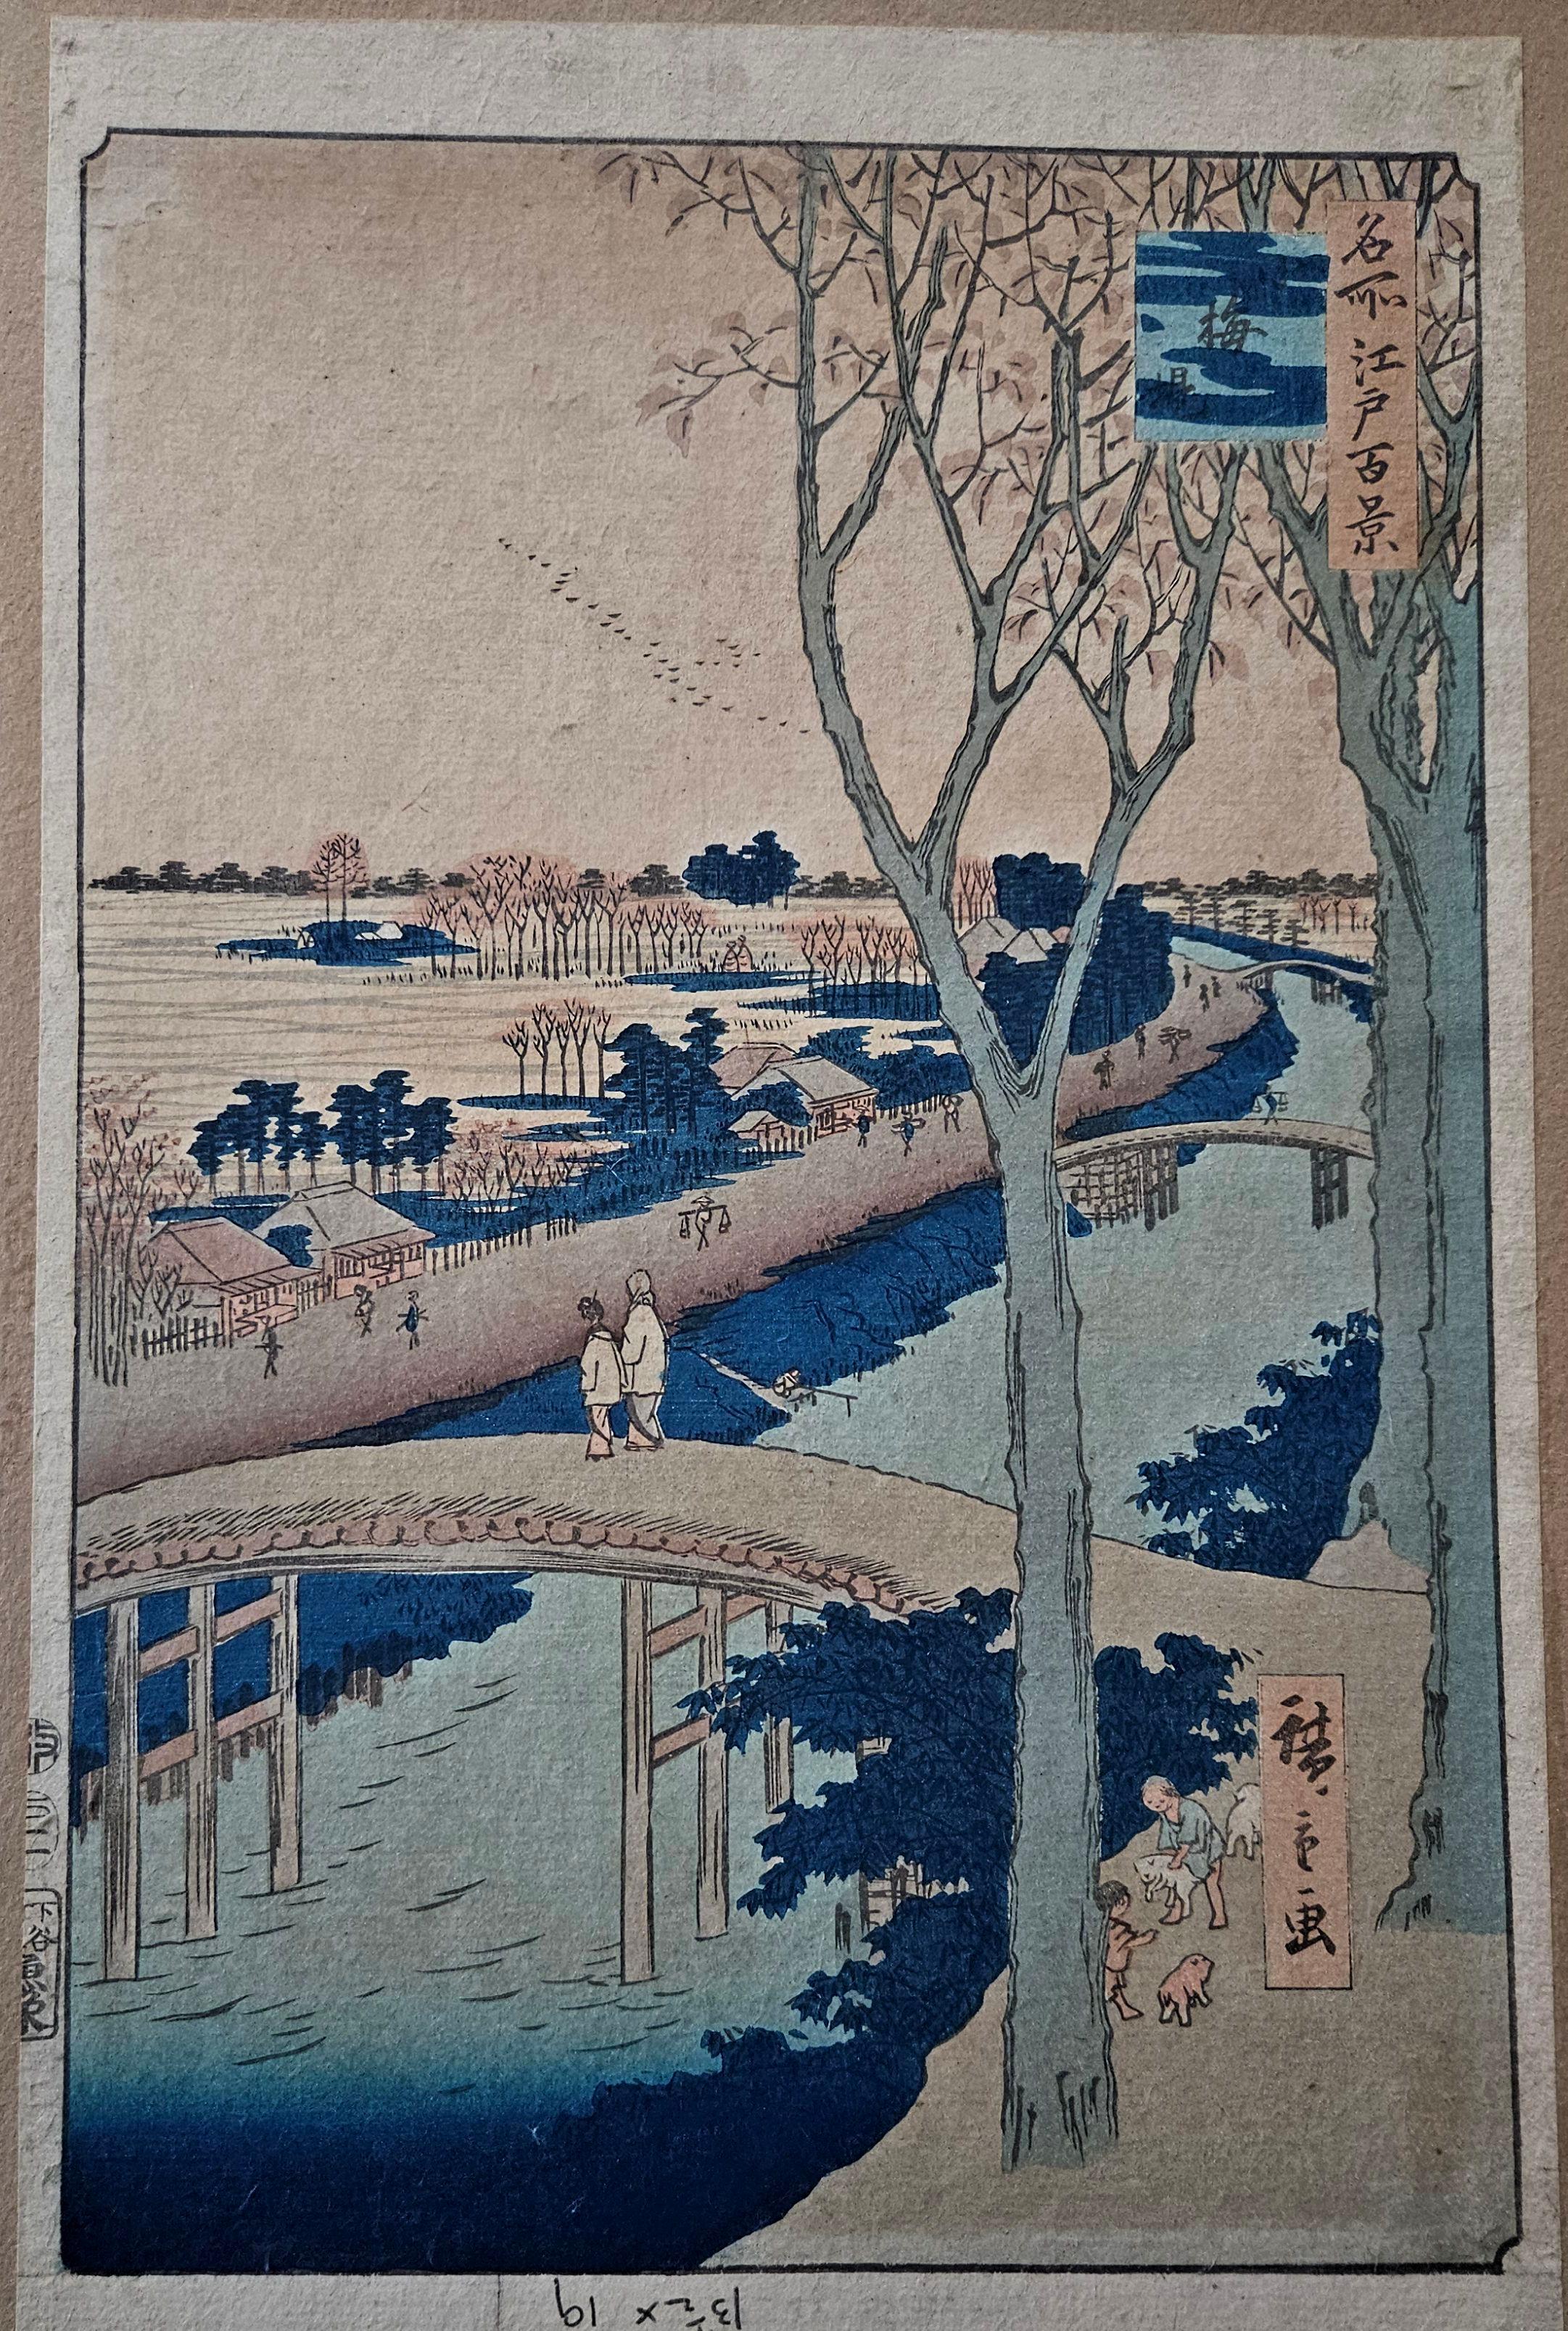 Utagawa Hiroshige (1797–1858)
One Hundred Famous Views of Edo - Koume Embankment
mounted on a cardboard

Artist:
Utagawa Hiroshige is recognized as a master of the ukiyo-e woodblock printing tradition, having created 8,000 prints of everyday life